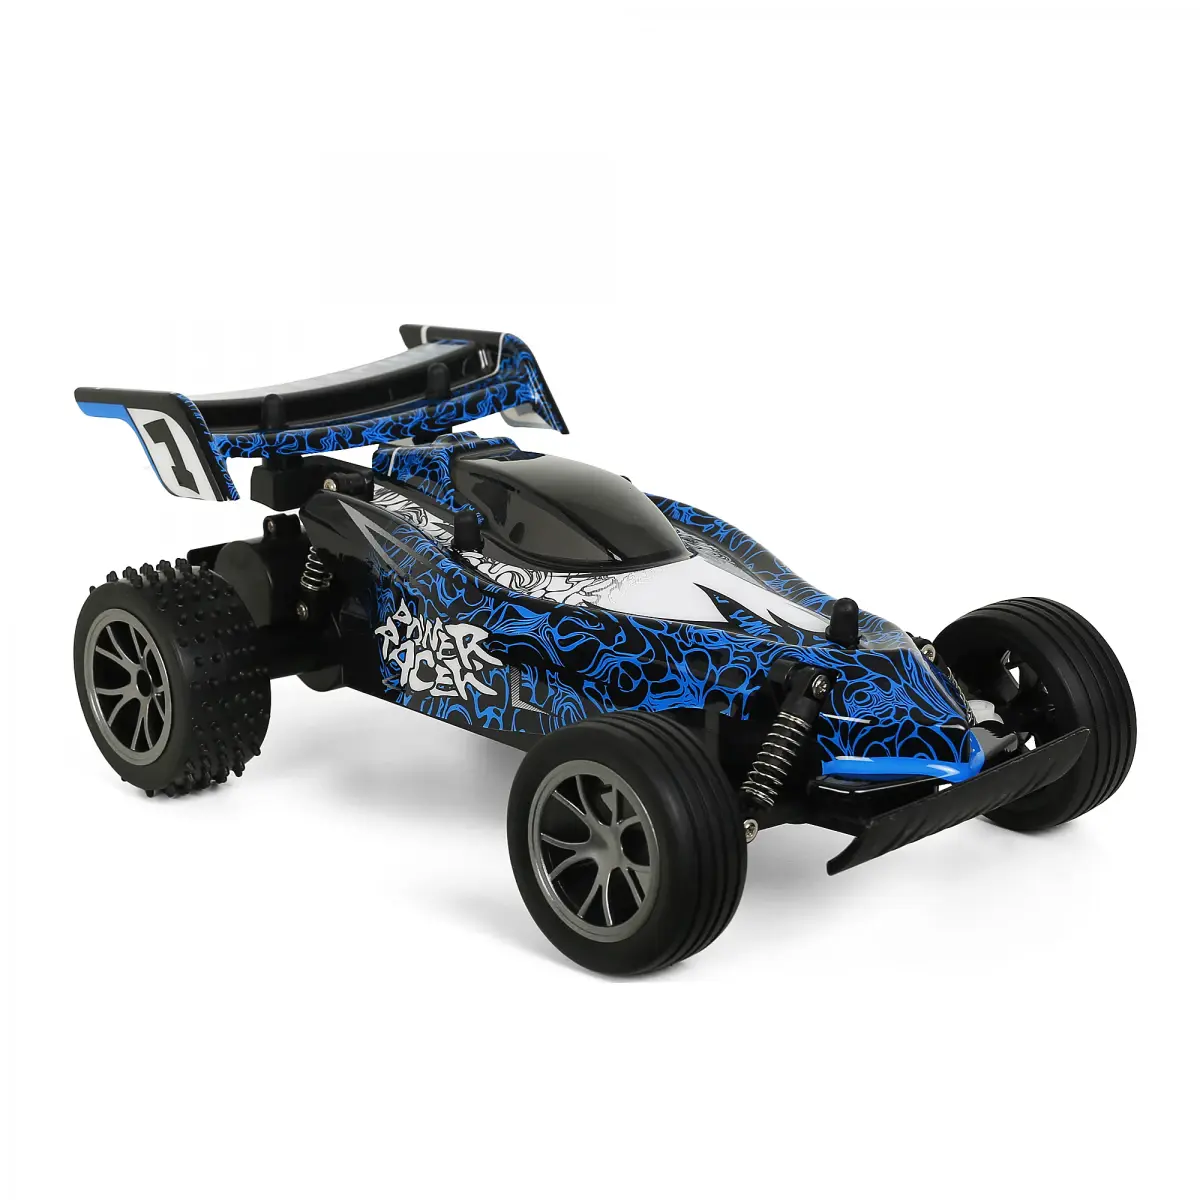 Ralleyz Remote Control Buggy High Speed Car, 3Y+, Blue